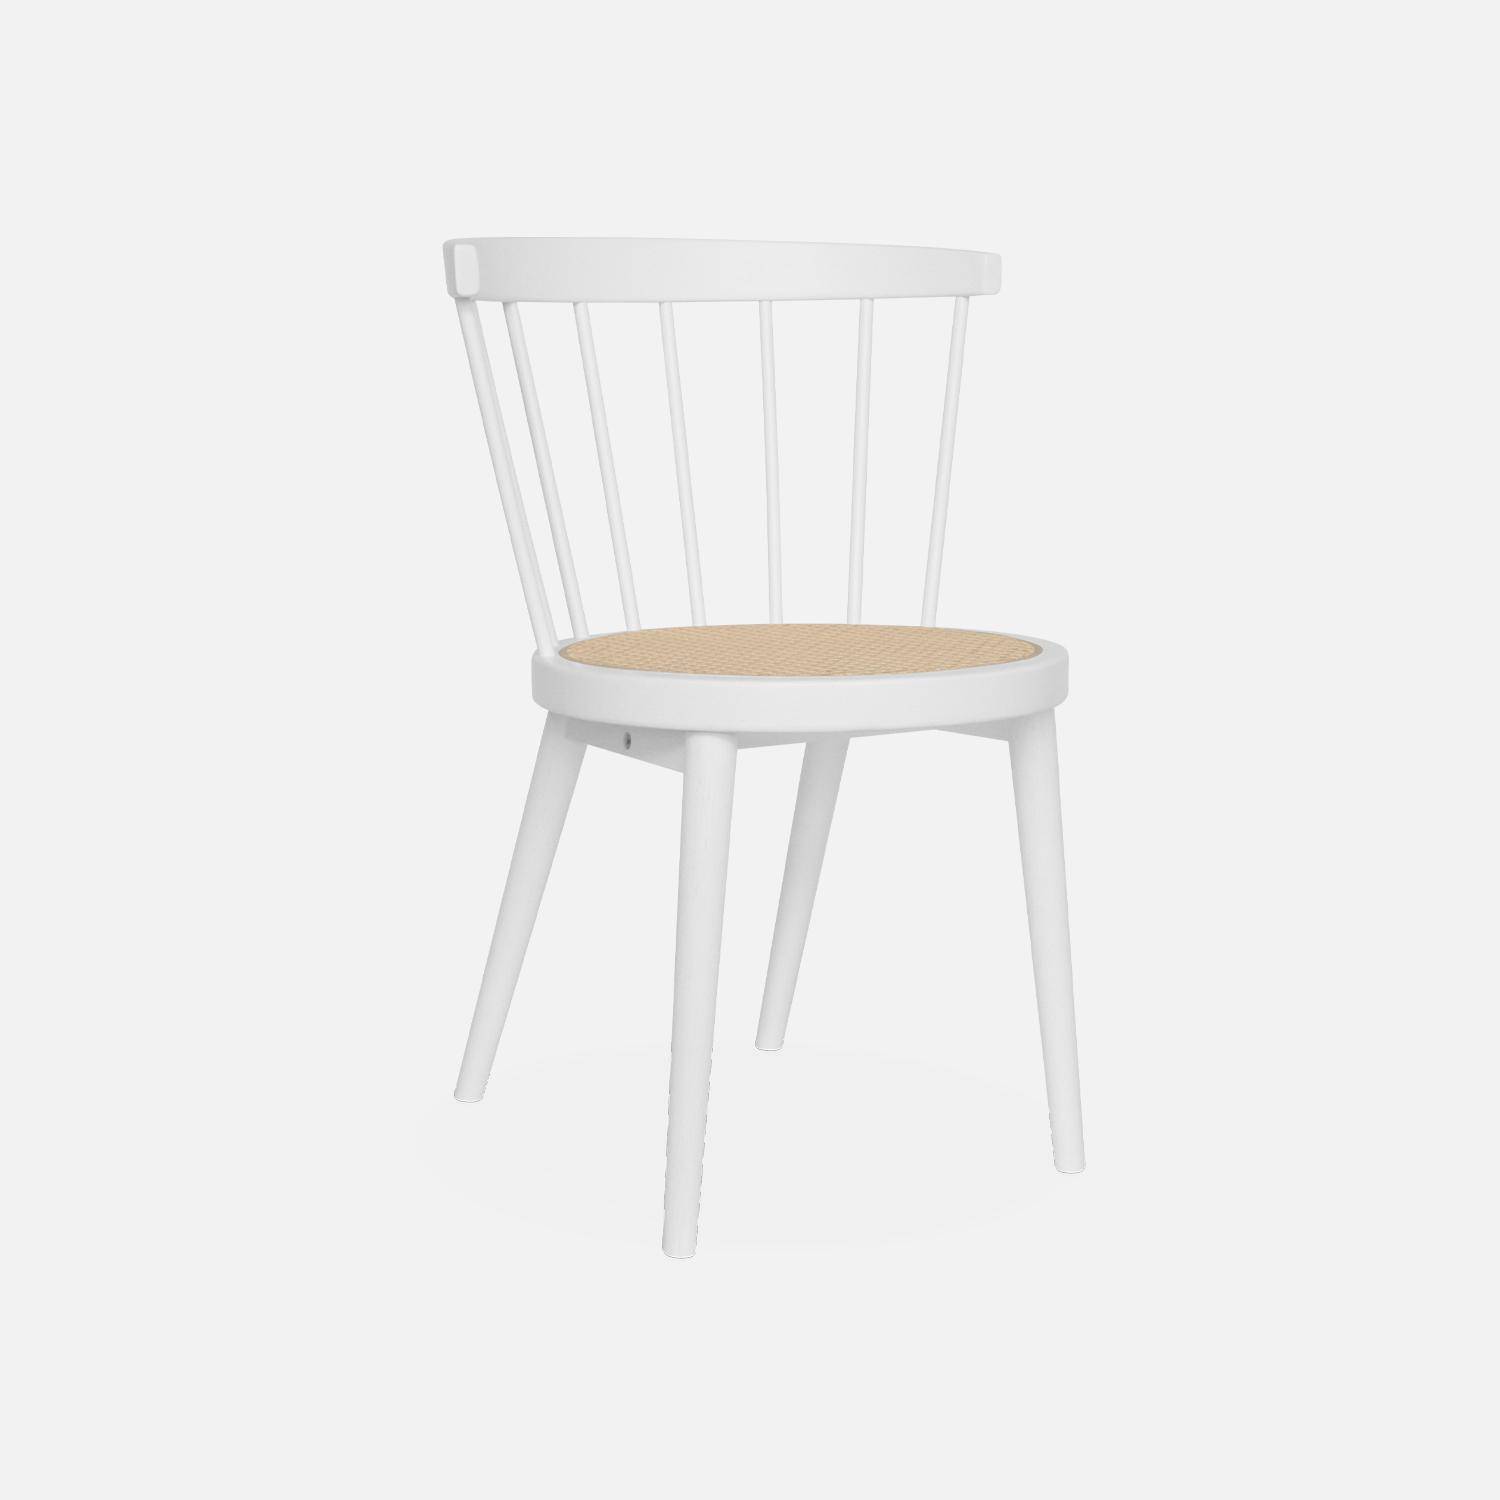 Juego de 2 sillas de madera blanca y caña, Nora, A 54 x P 54 x Alt 76,5cm. Photo4